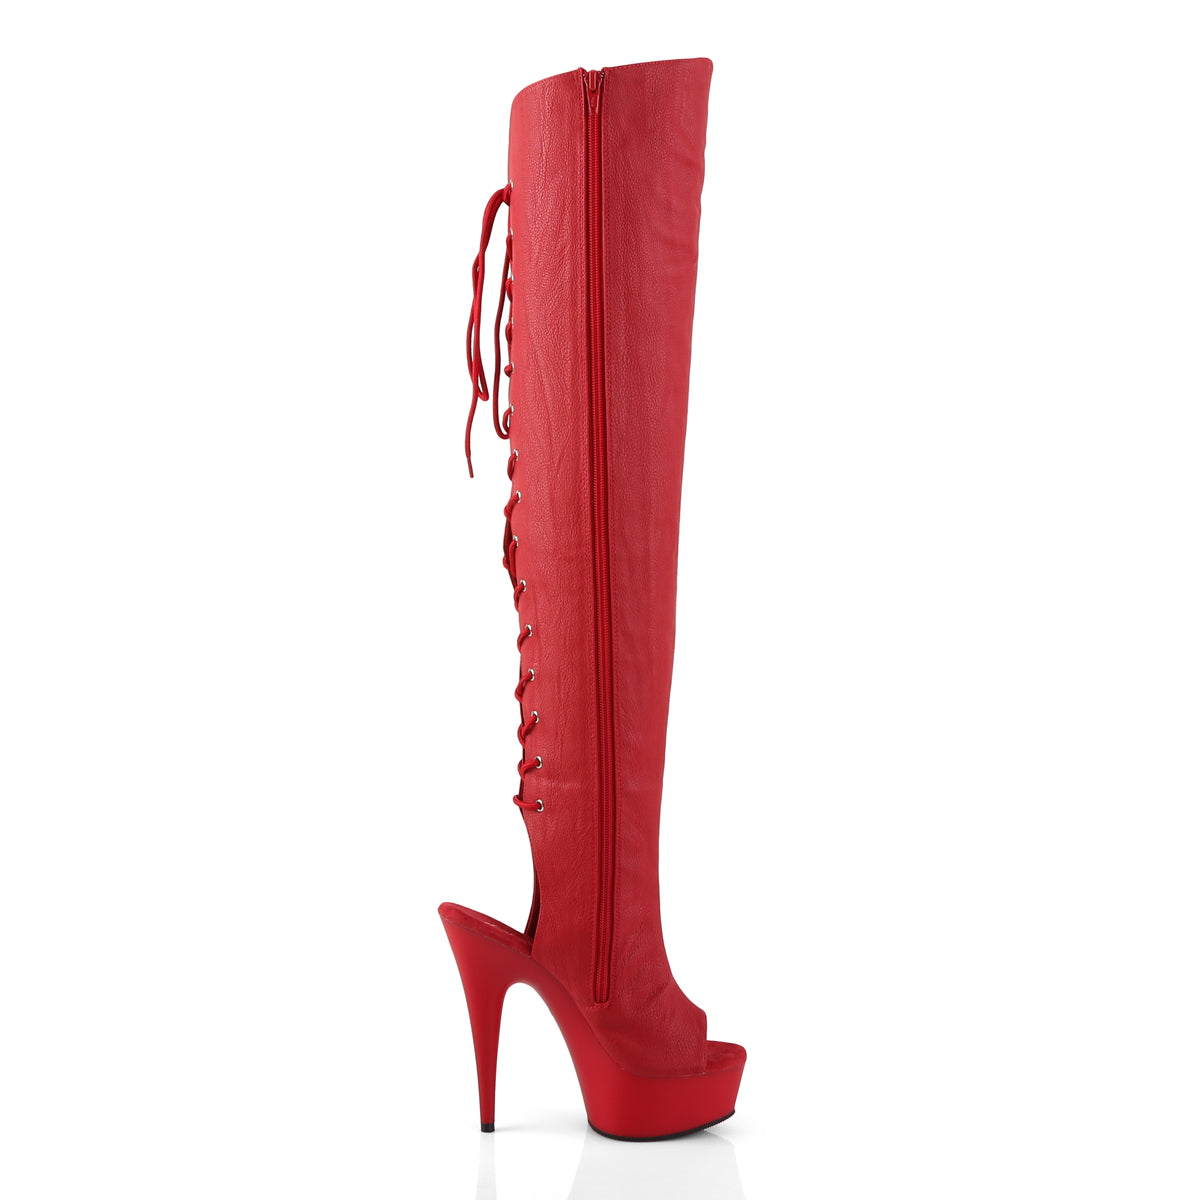 DELIGHT-3019 Pleaser 6 Inch Heel Red Pole Dancing Platforms-Pleaser- Sexy Shoes Fetish Heels